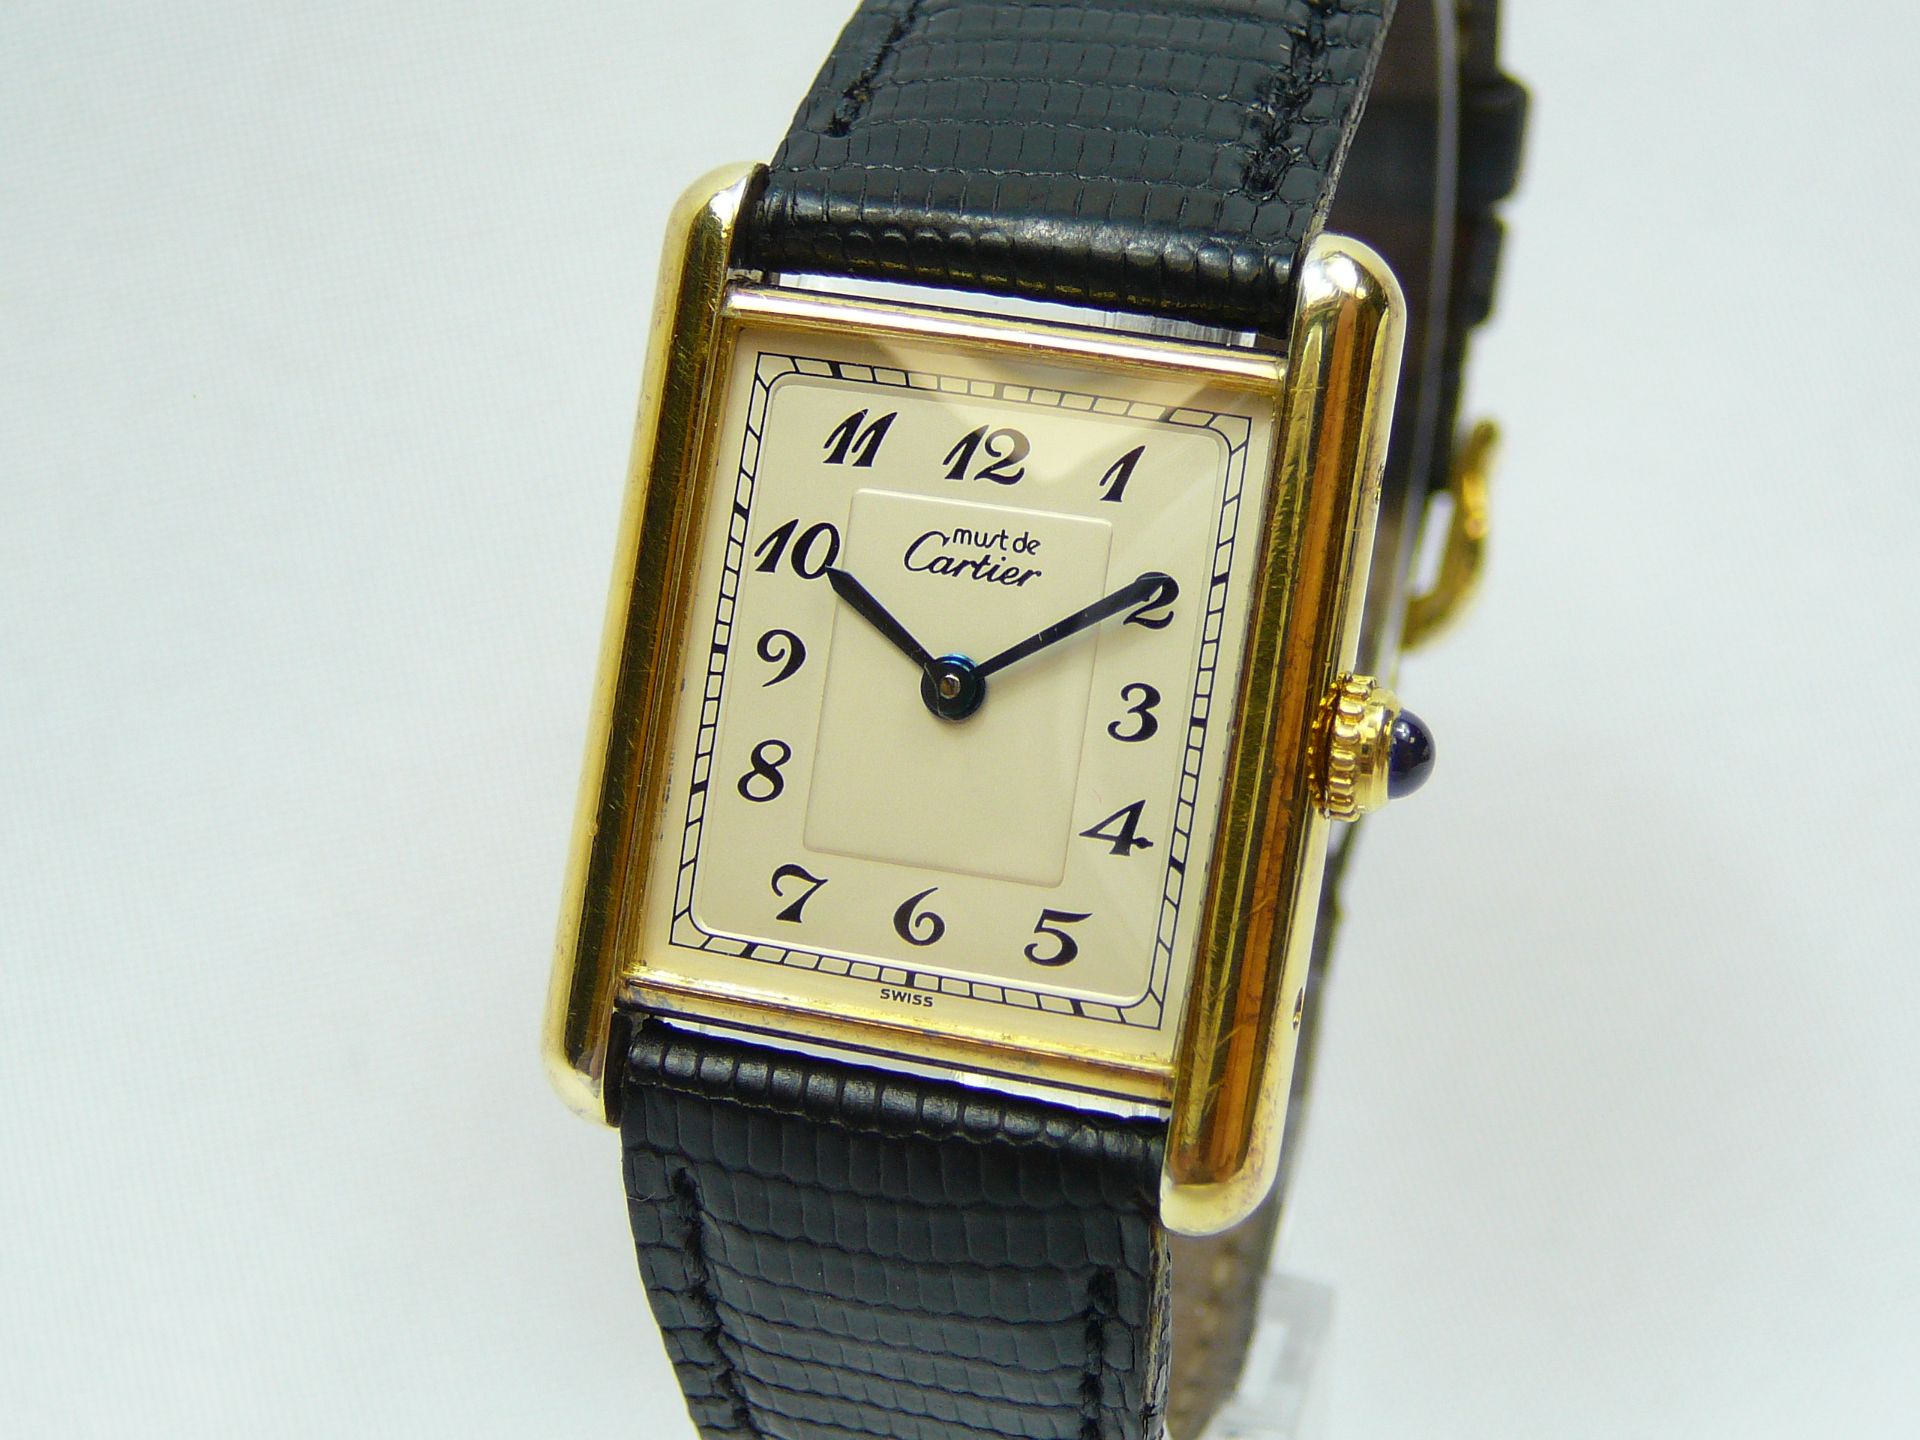 Ladies Cartier Wrist Watch - Image 2 of 3